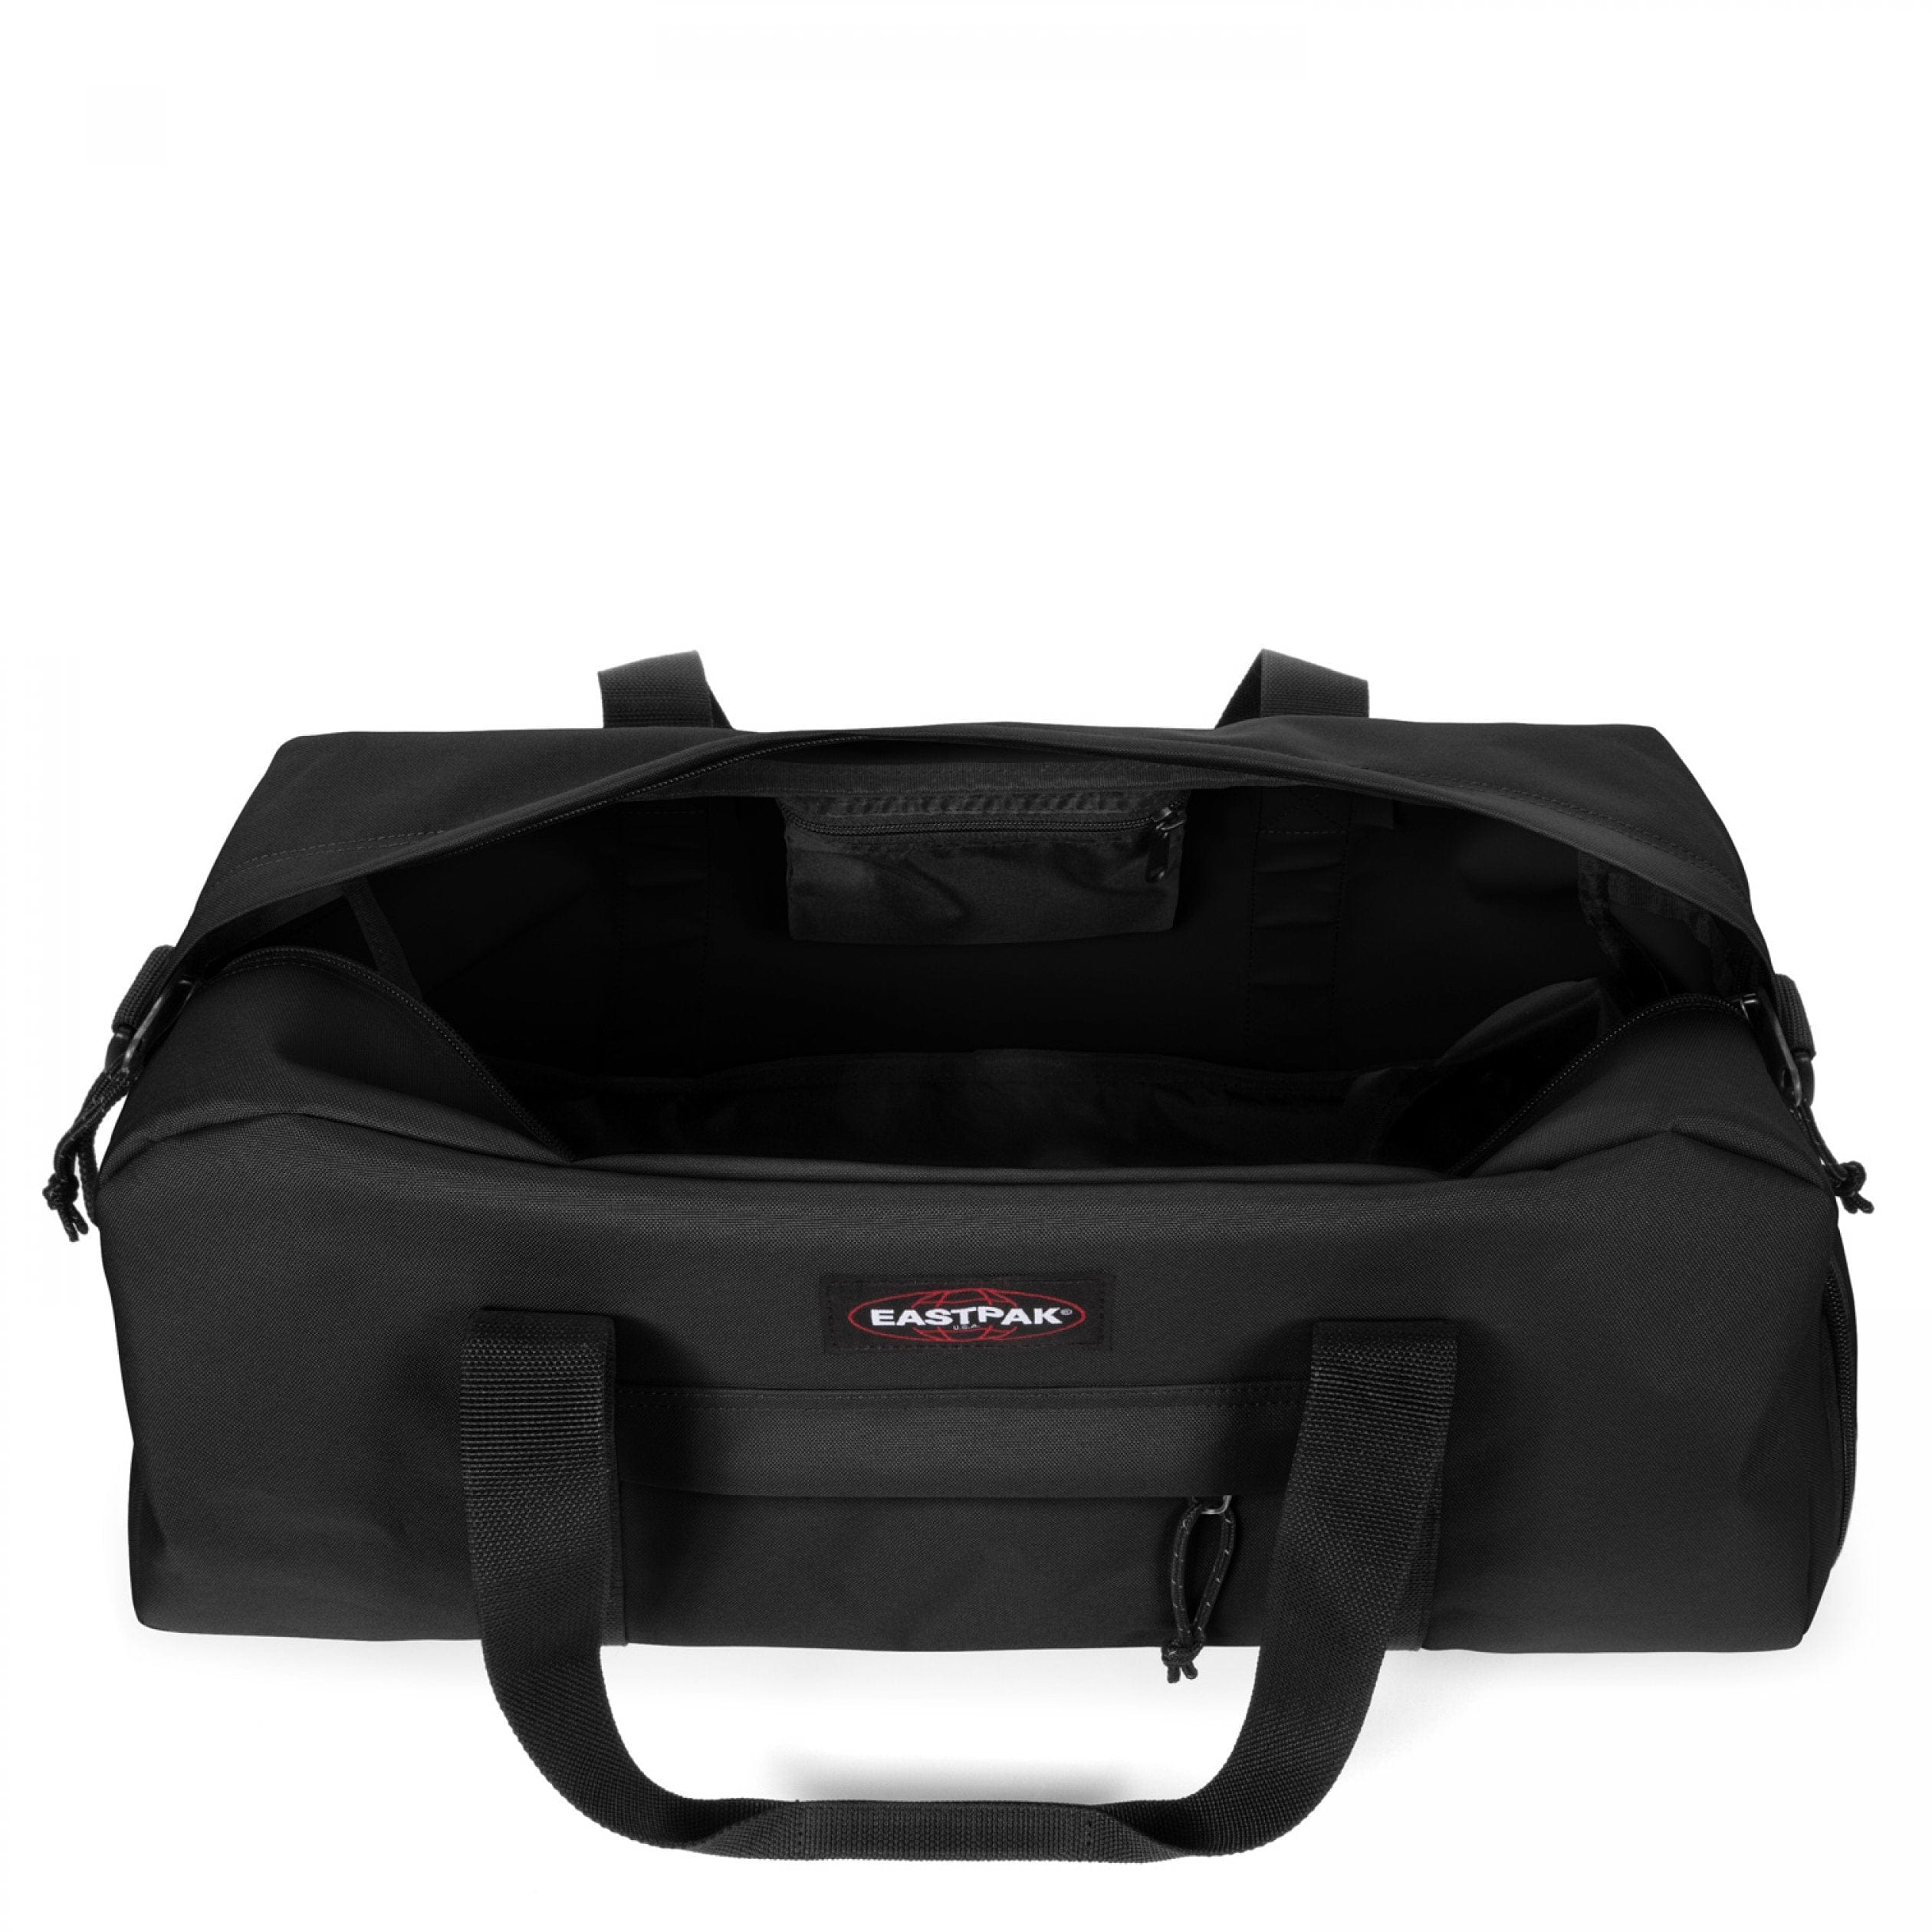 EASTPAK-Stand More-foldaway duffle bag-Black-EK0A5B9H008